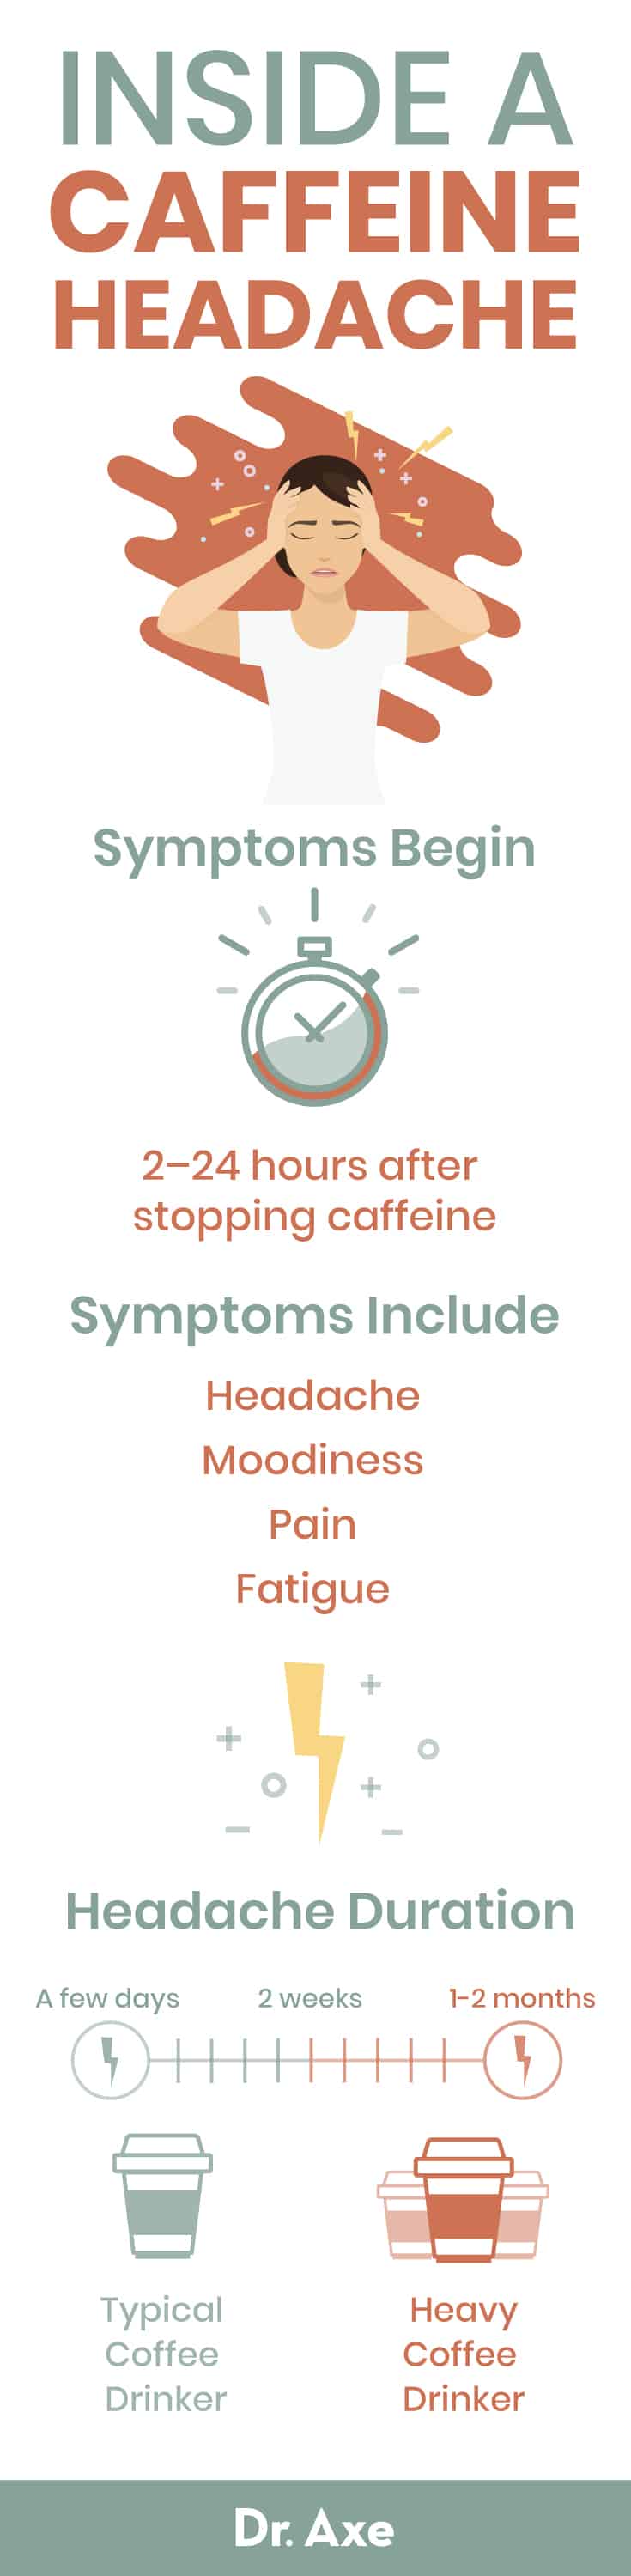 What Do Caffeine Withdrawal Headaches Feel Like?